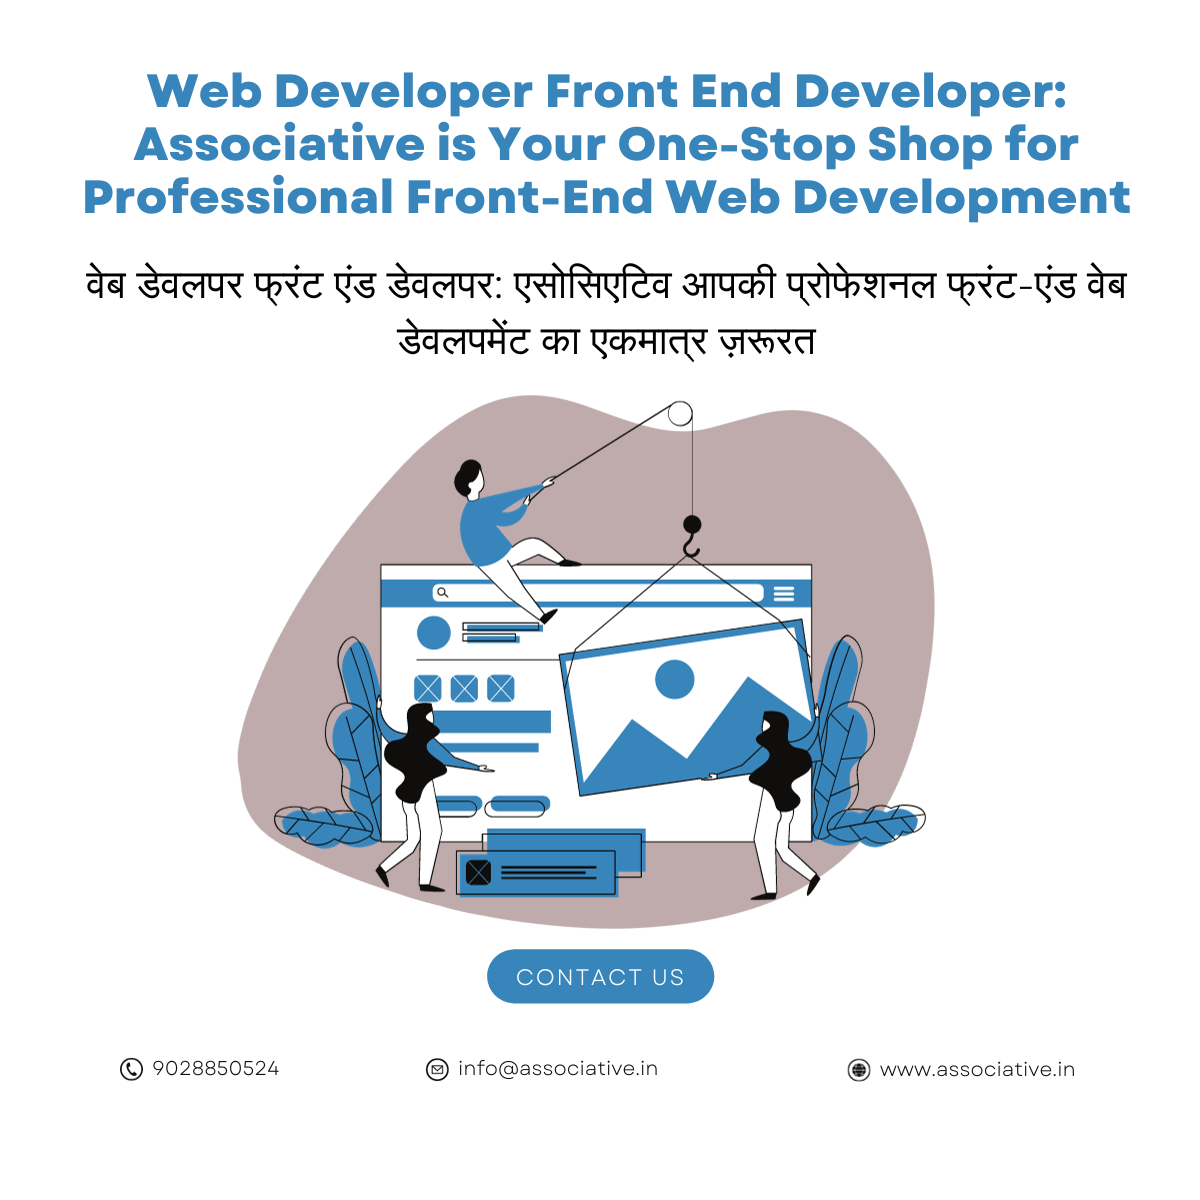 Web Developer Front End Developer: Associative is Your One-Stop Shop for Professional Front-End Web Development वेब डेवलपर फ्रंट एंड डेवलपर: एसोसिएटिव आपकी प्रोफेशनल फ्रंट-एंड वेब डेवलपमेंट का एकमात्र ज़रूरत